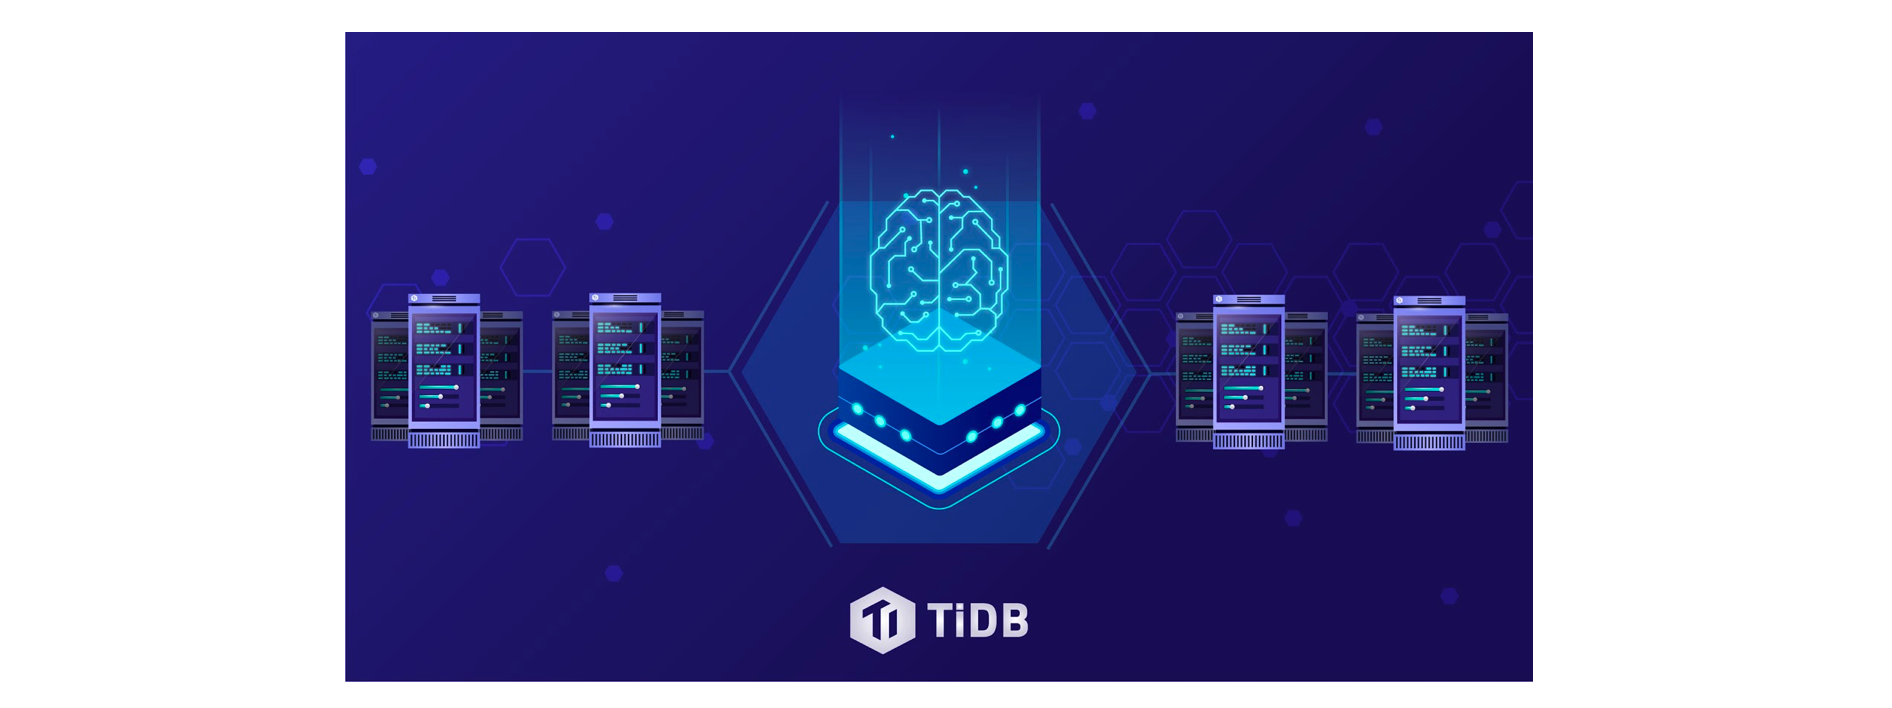 TiDB 2.1 announcement